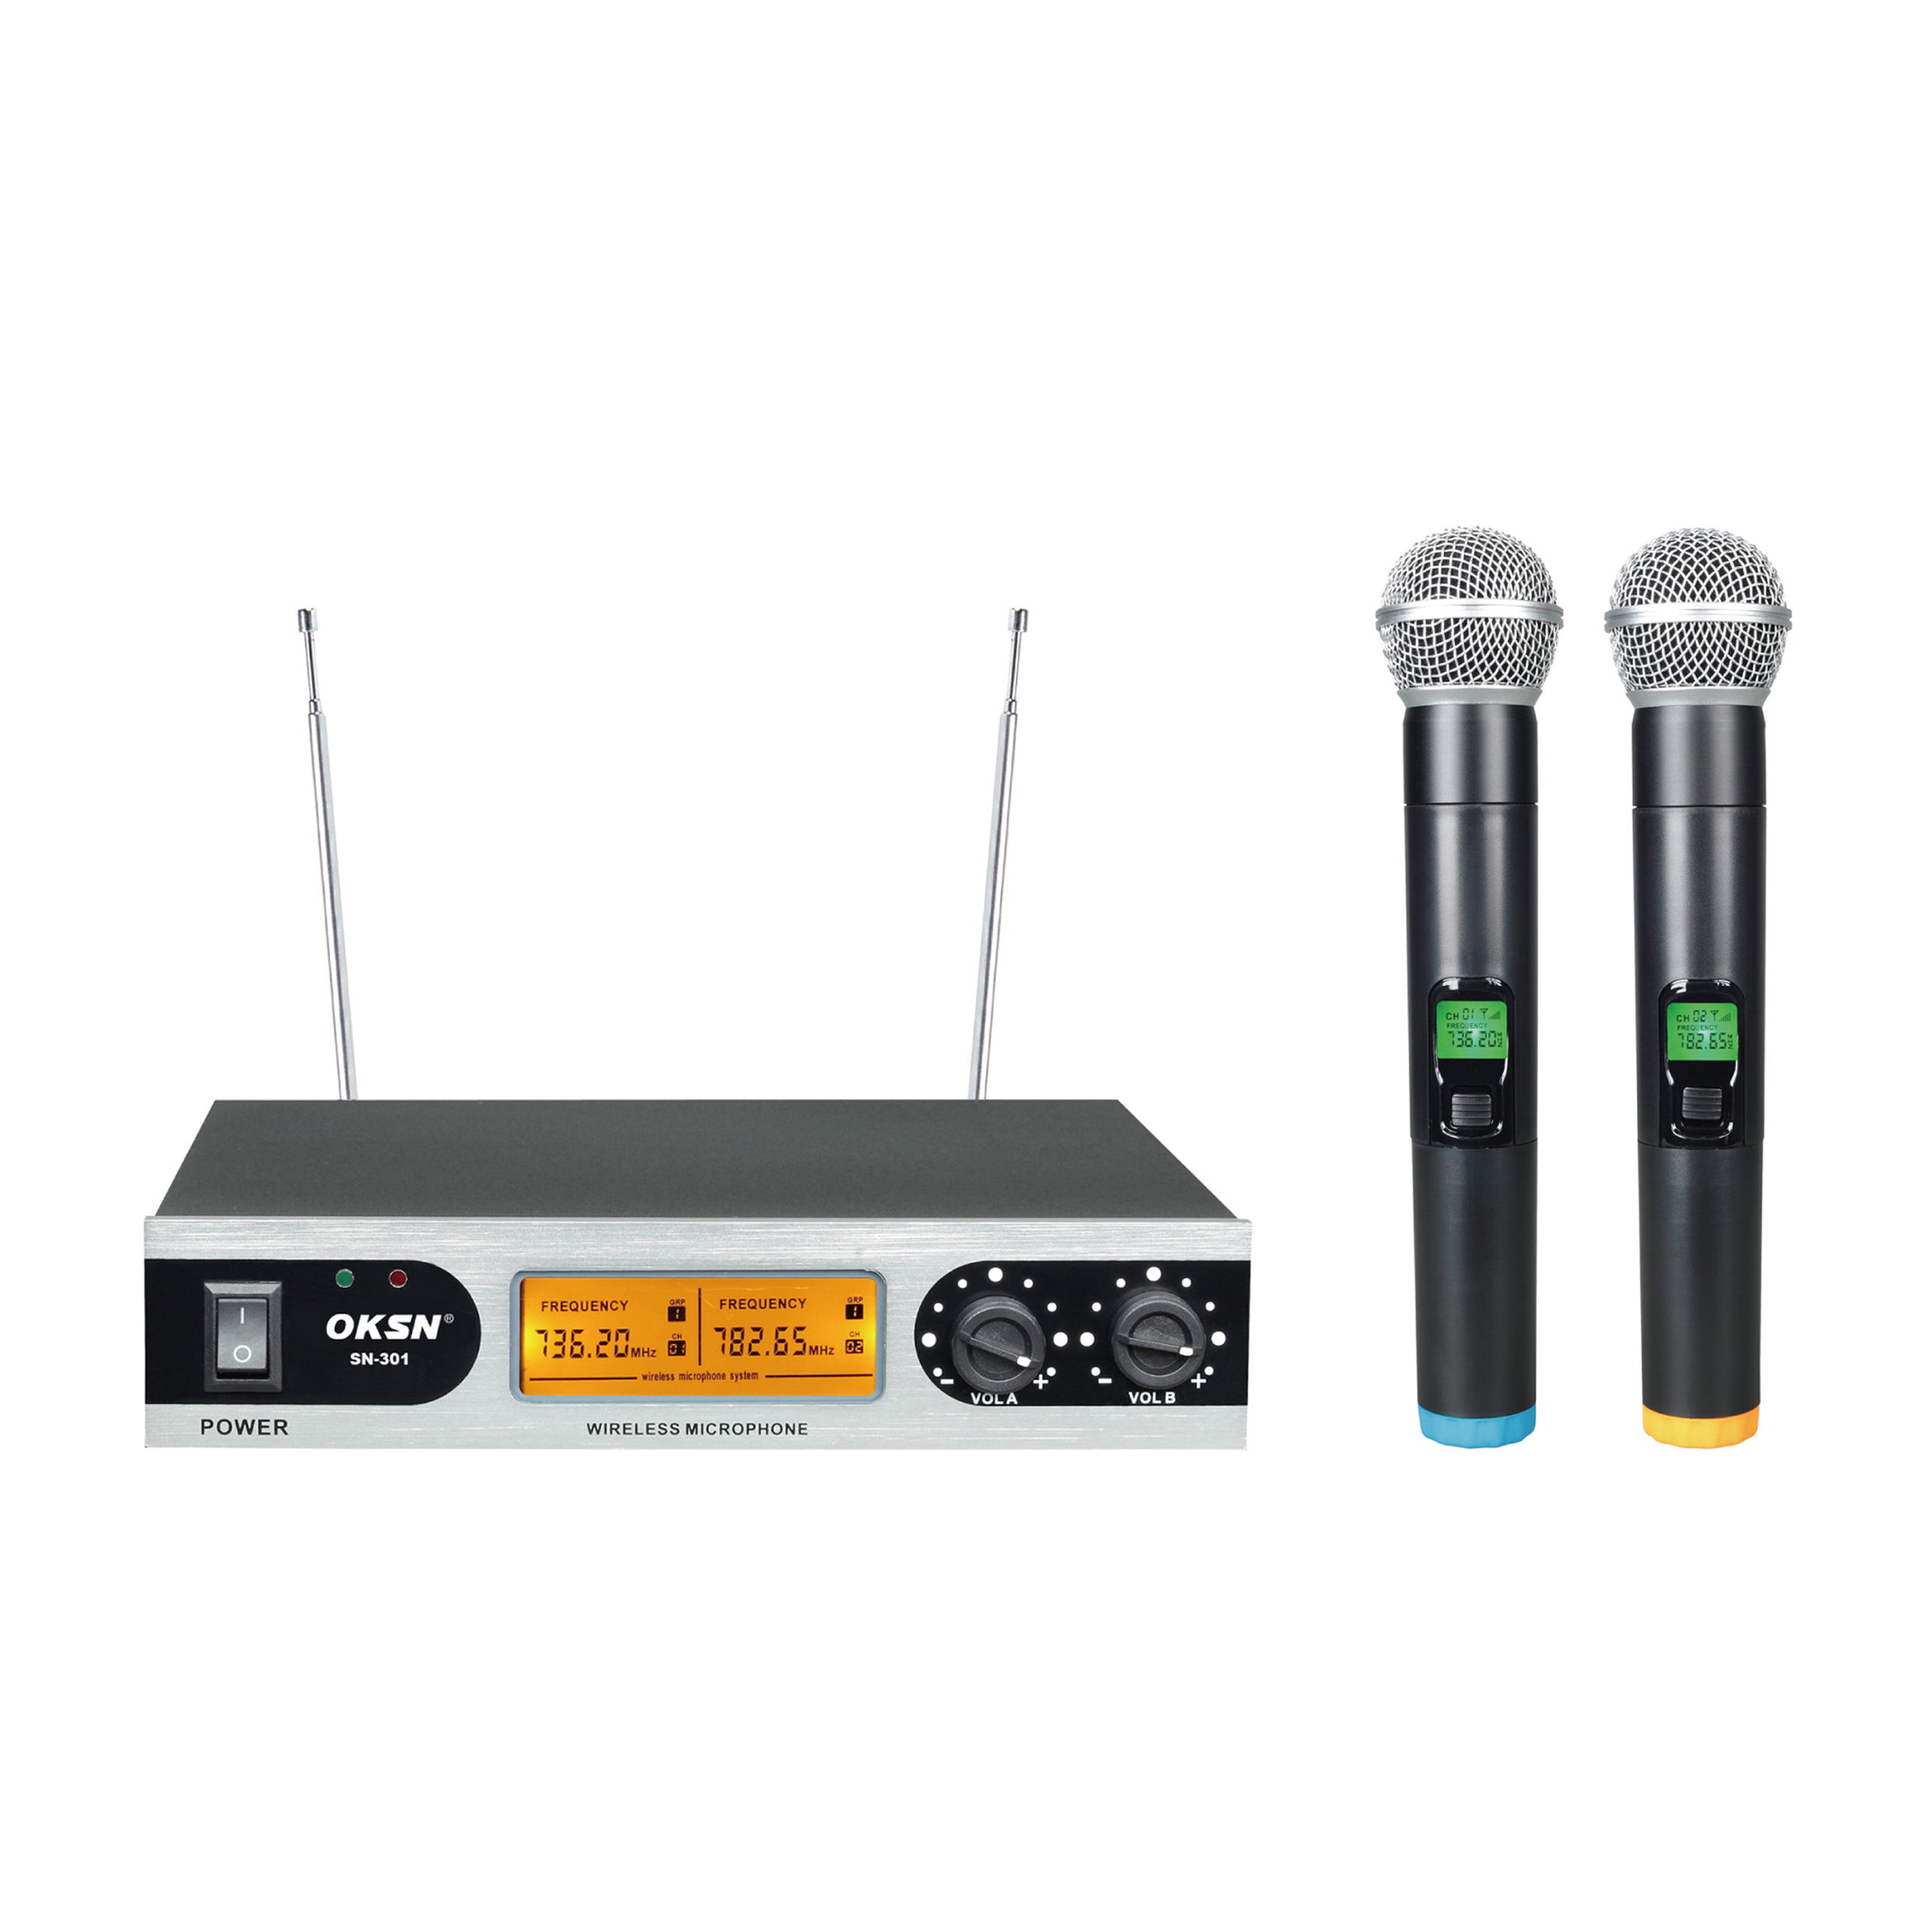 The Advantages of a Microphone：Gooseneck/Karaoke/Wireless Microphone